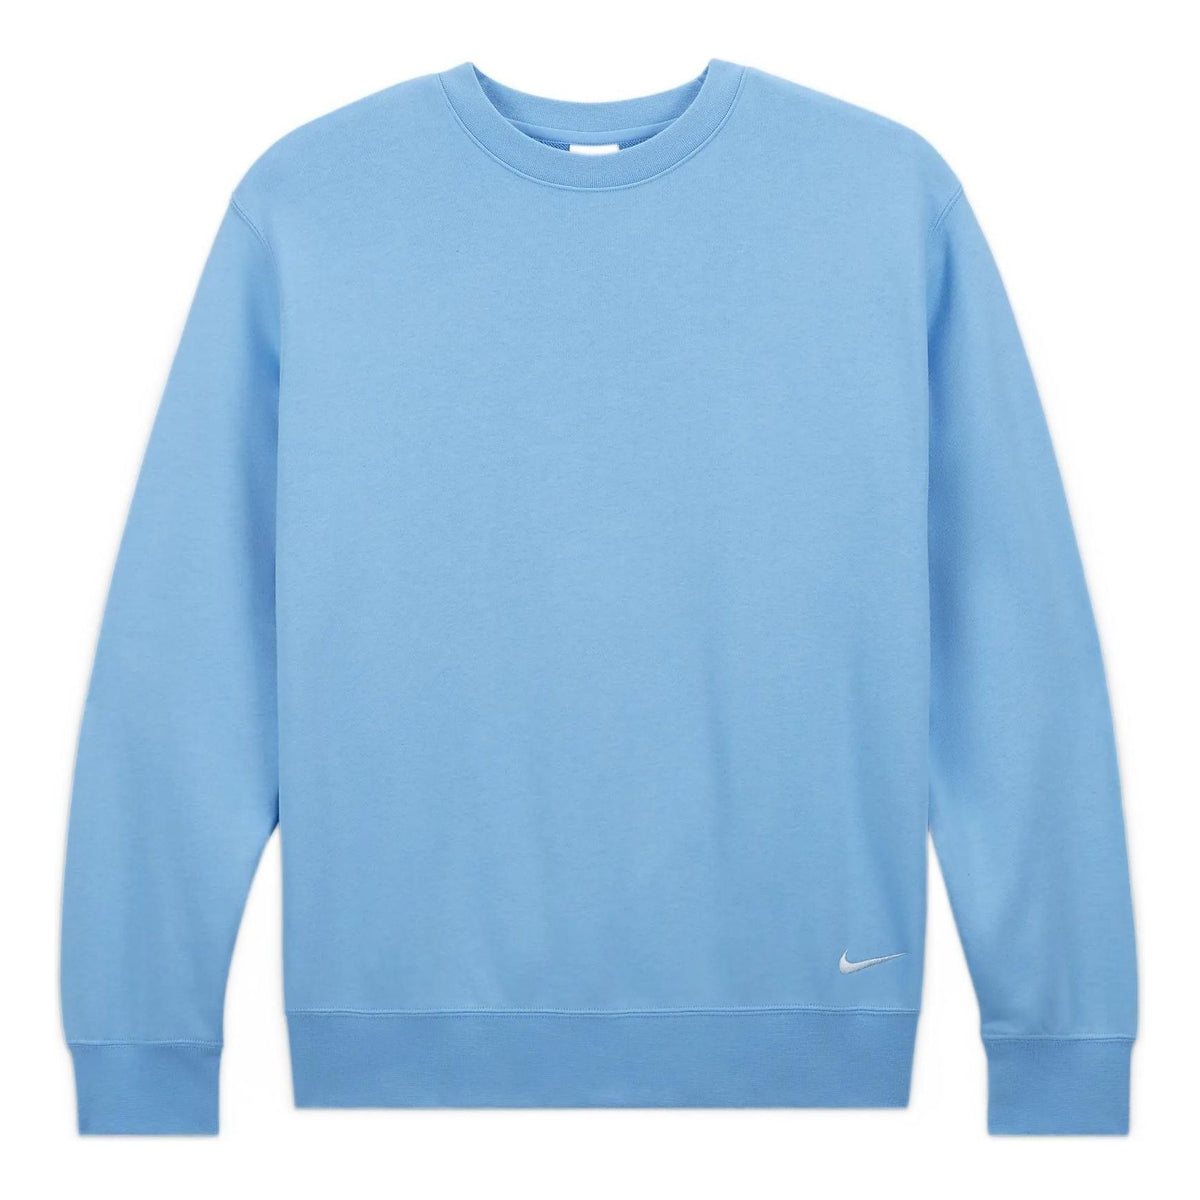 Nike embroidered side logo sweatshirt 'Ice Blue' FB7223-412 - KICKS CREW